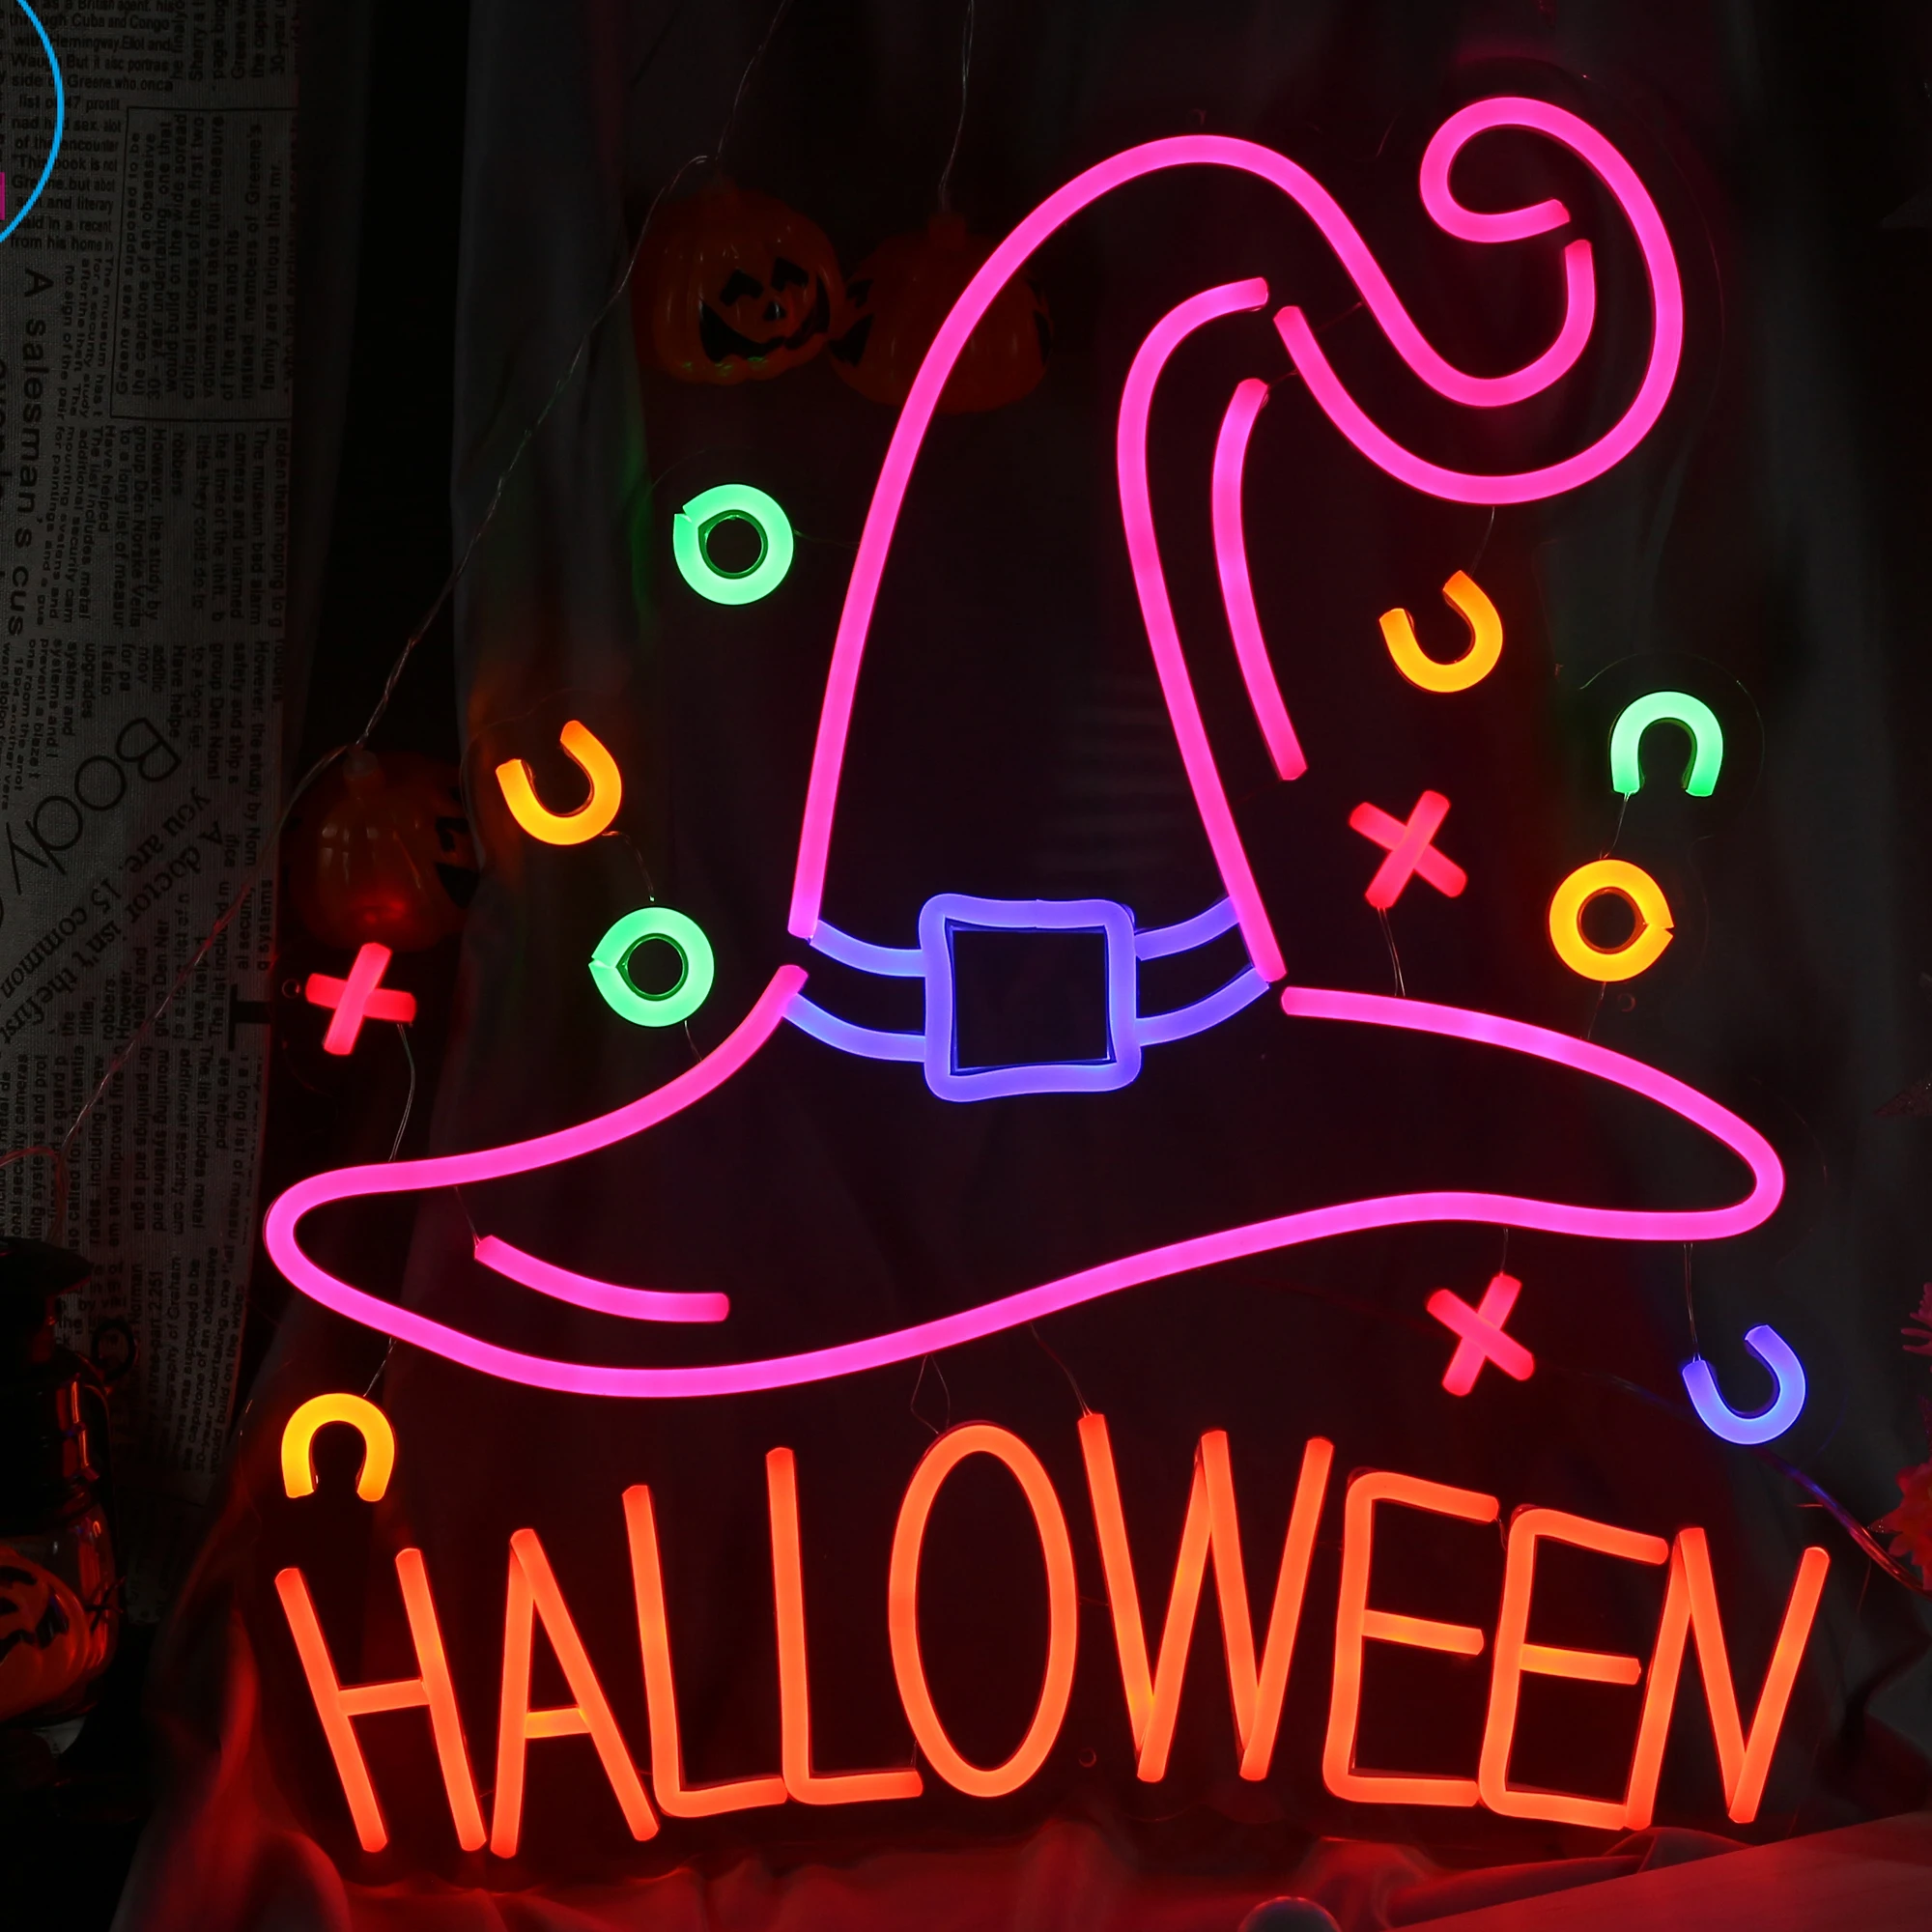 Custom Led Flex Neon Sign Visual Art Bar Pub Club Wall Hanging Flexible Lighting for Sign decoration Happy Halloween  neon